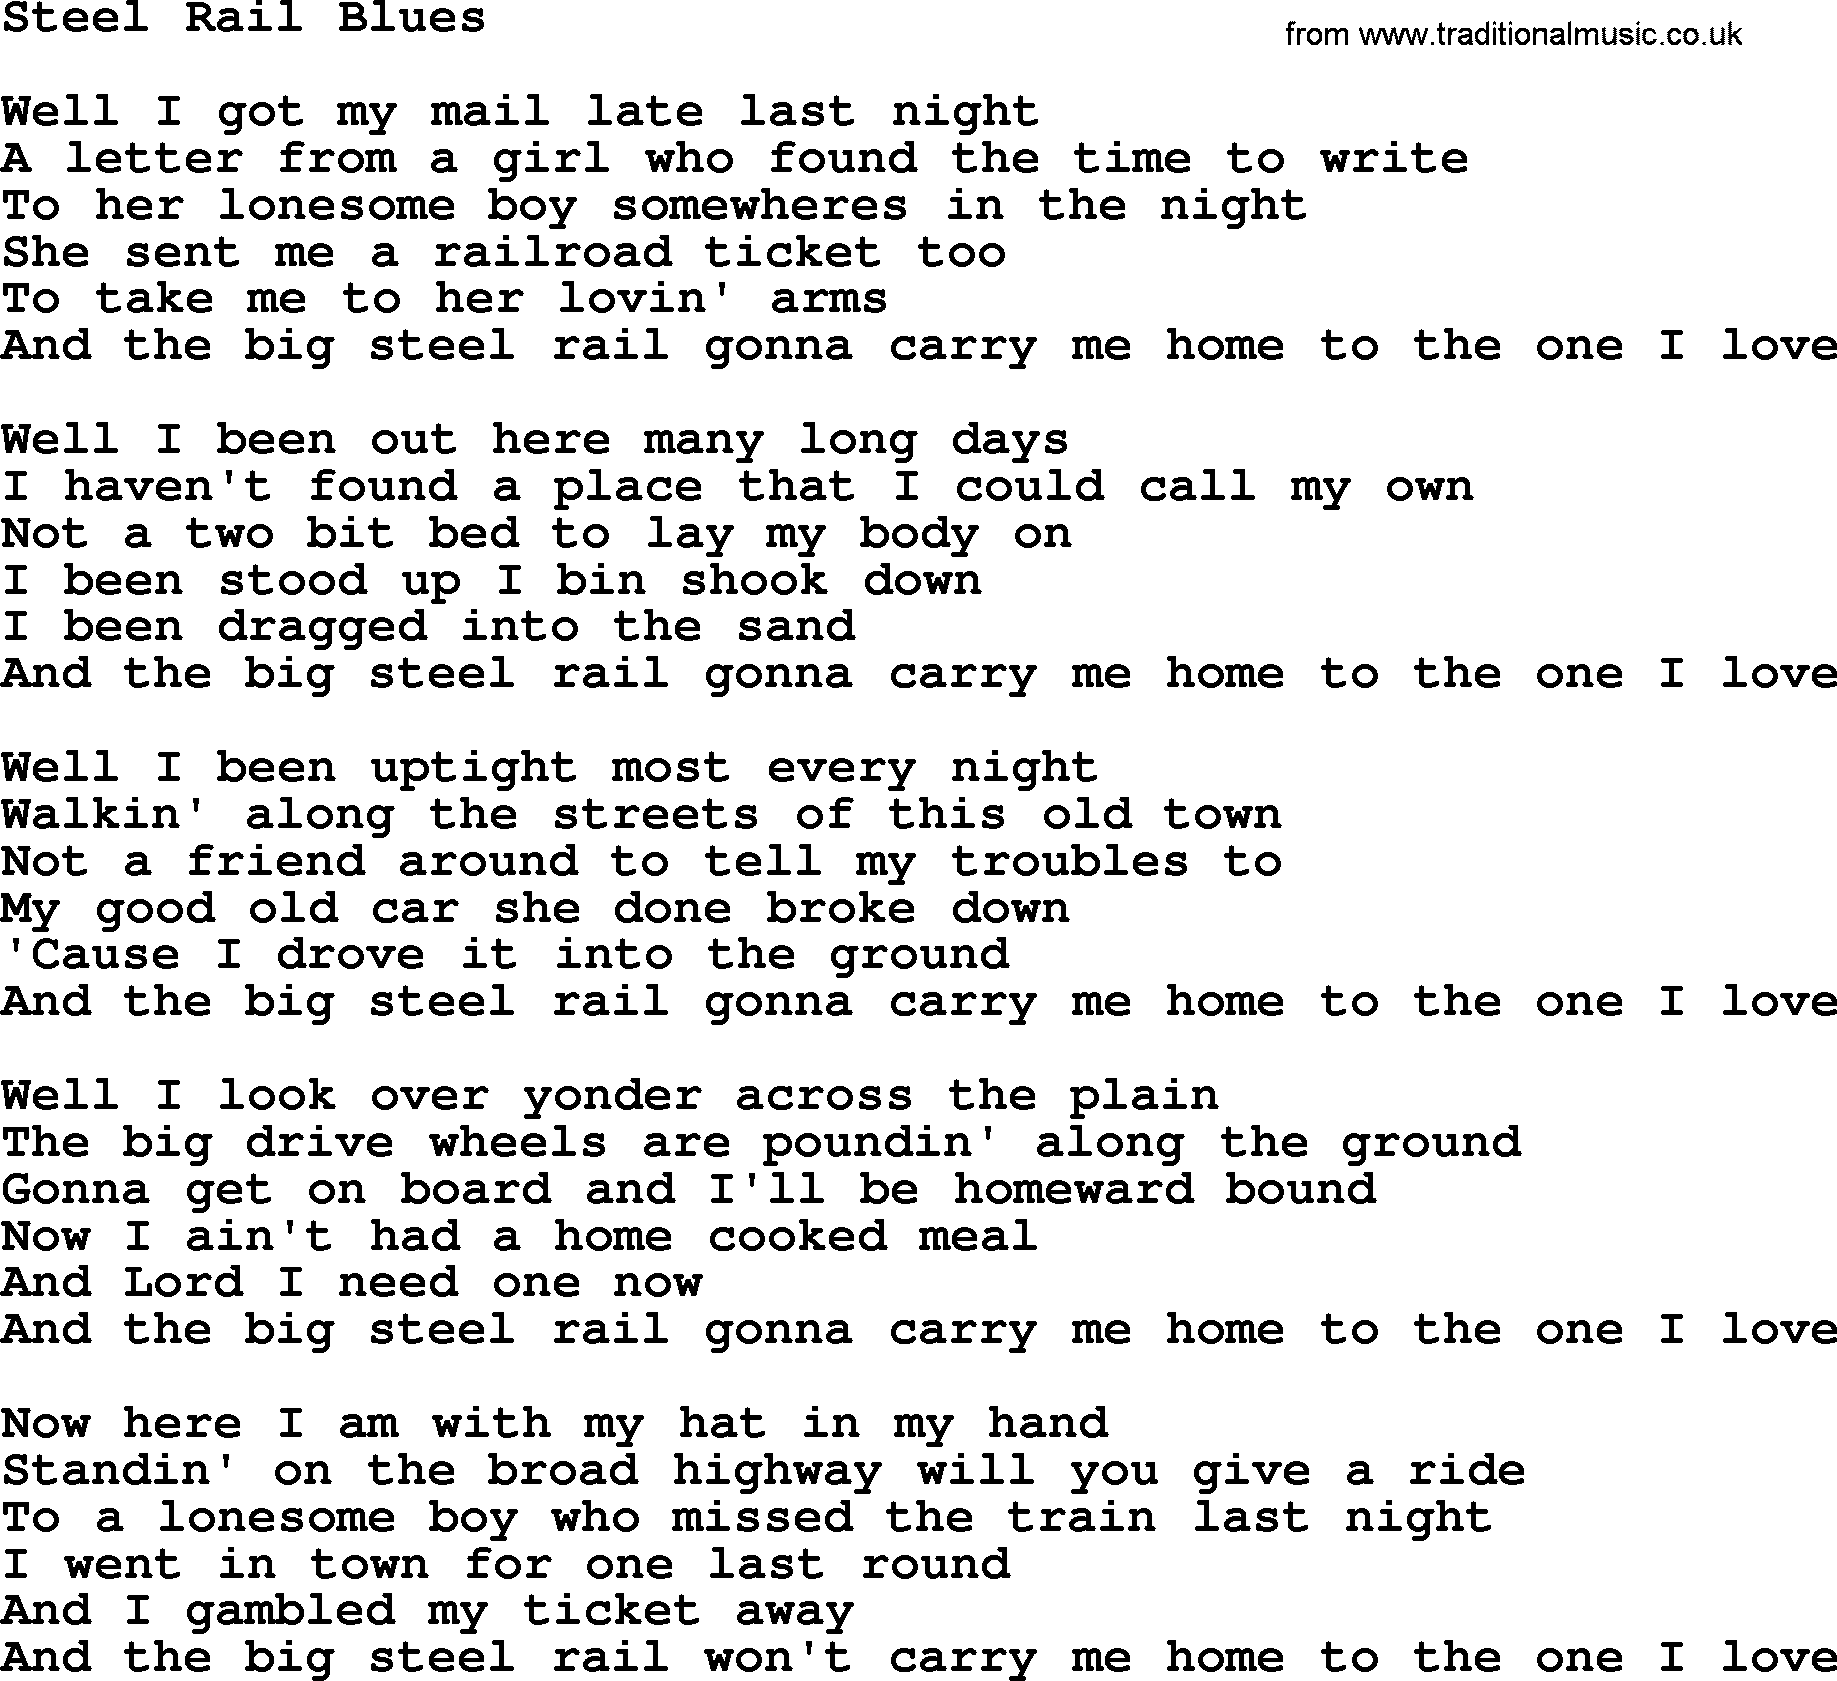 Gordon Lightfoot song Steel Rail Blues, lyrics